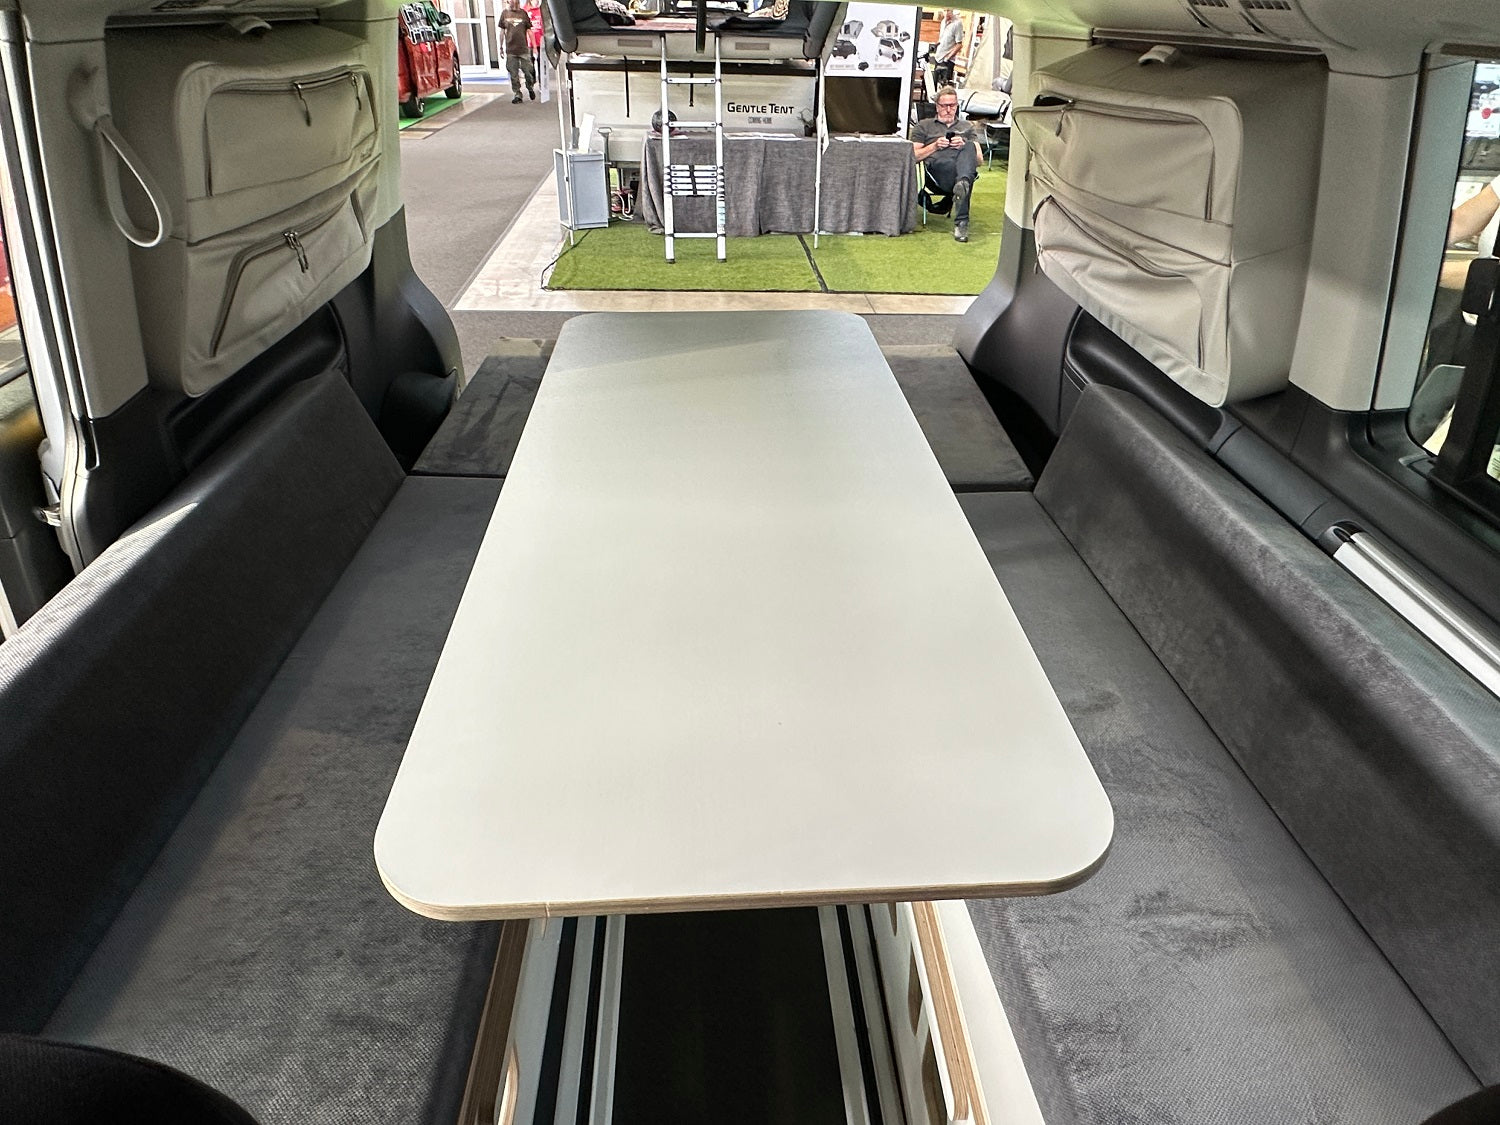 Moonbox Campingbox mit Tisch Van/Bus 124cm Modify Weiß